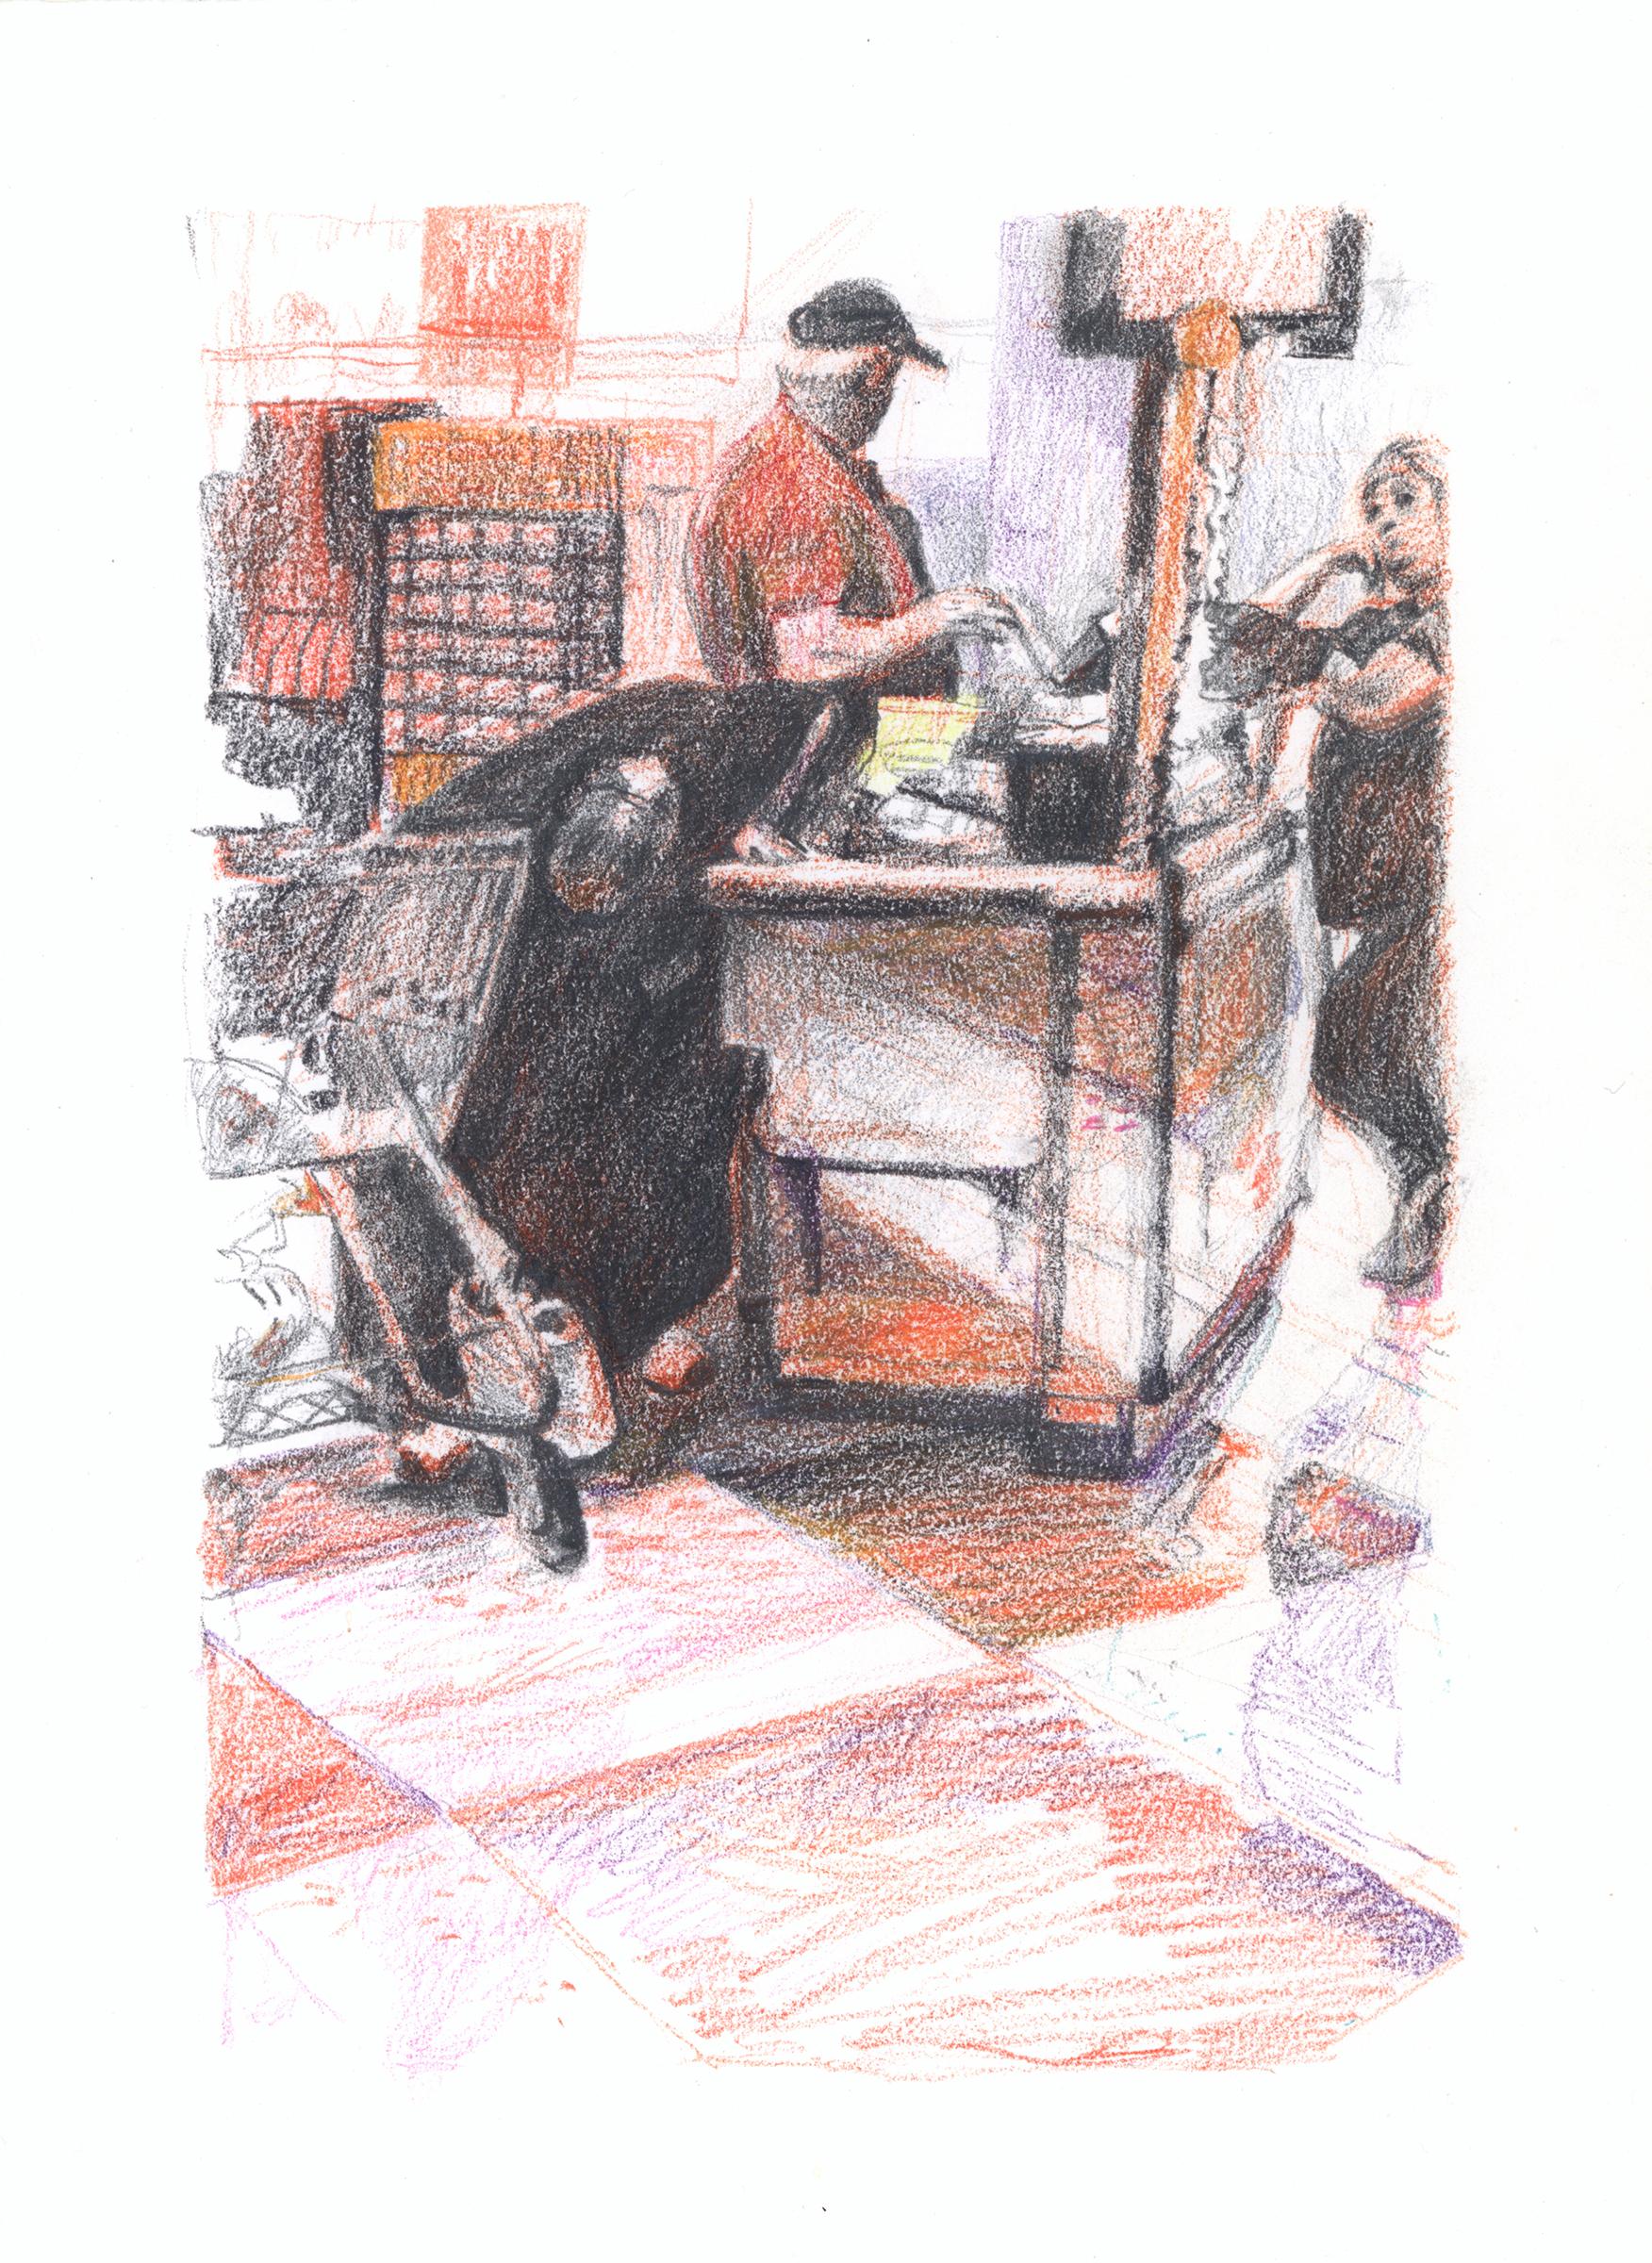 Eilis Crean Figurative Art - "Marketplace Cashier #34" - interior drawing - colorful work on paper - Daumier